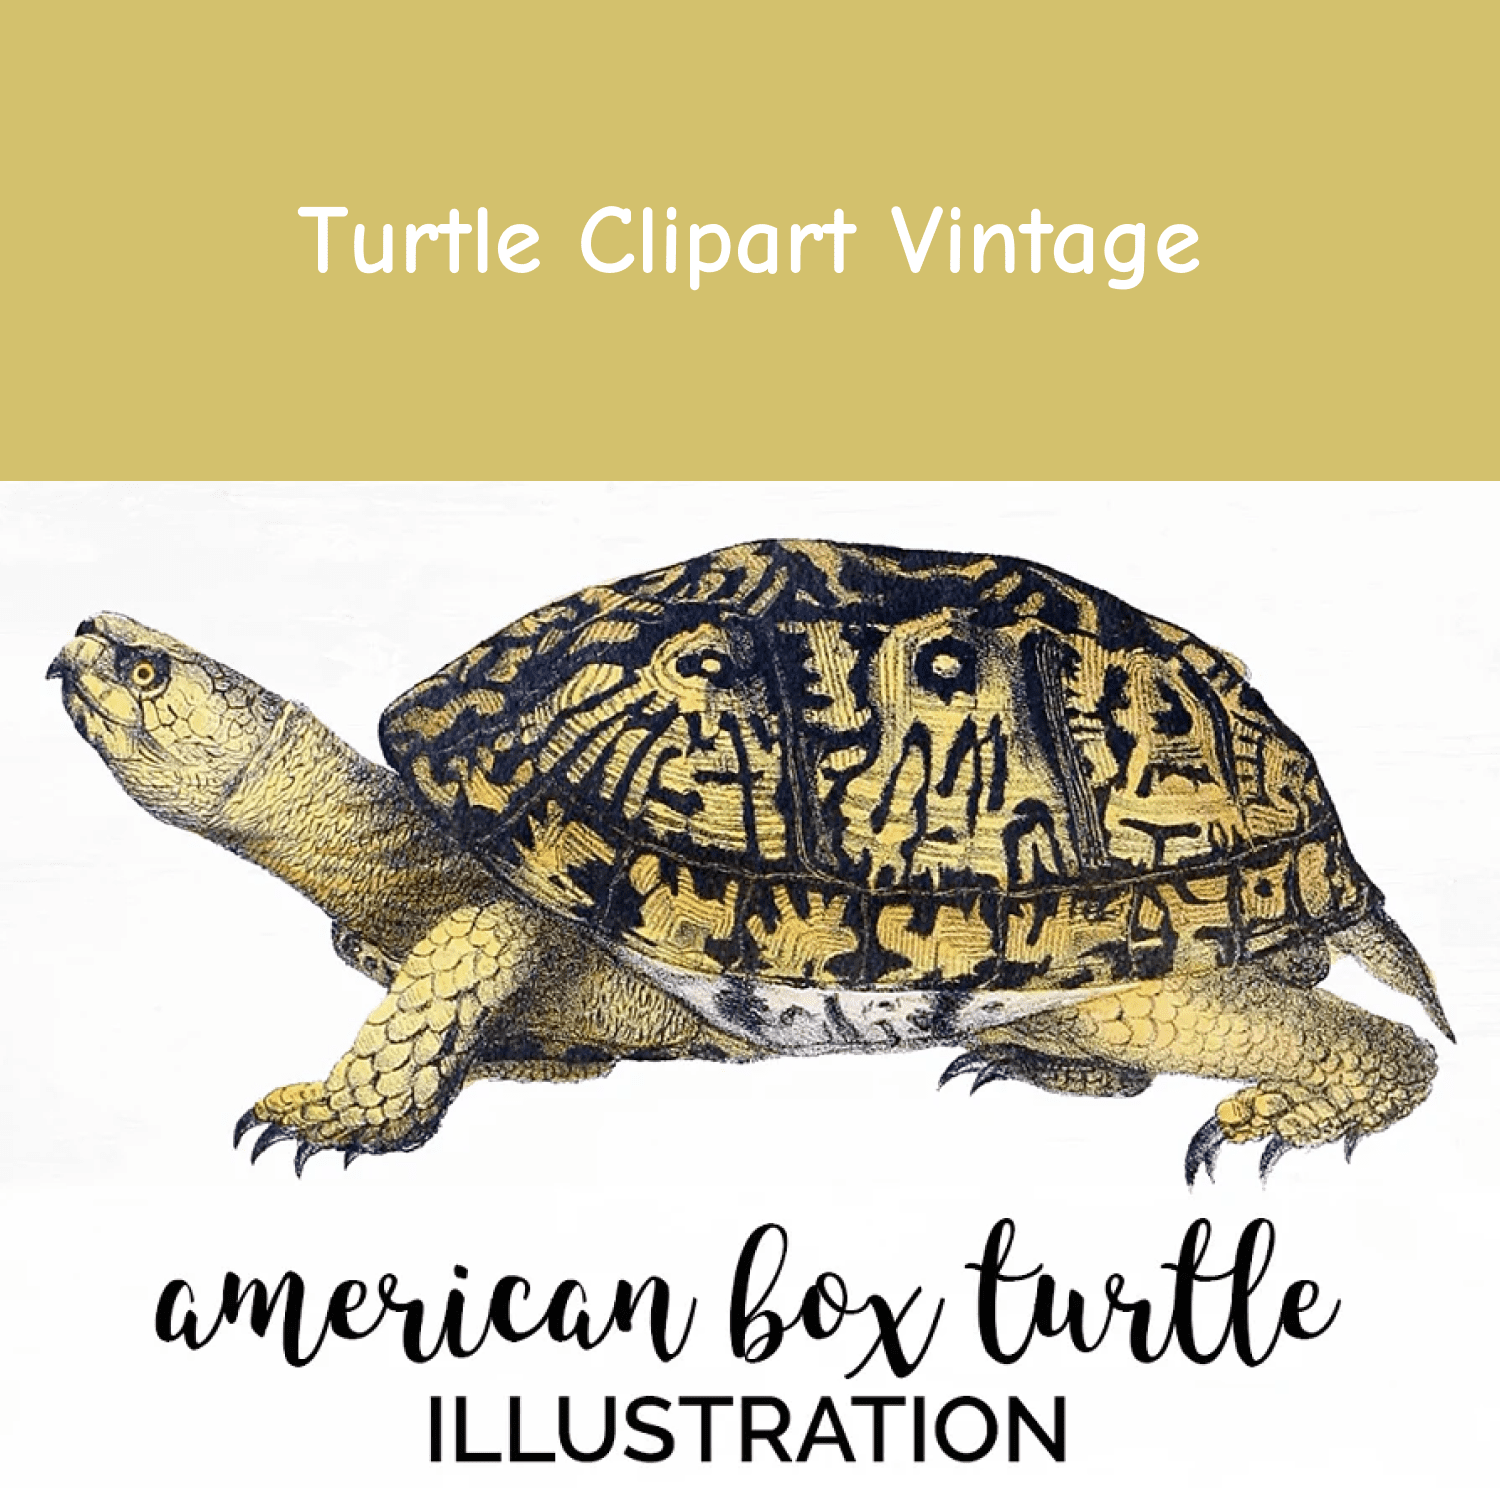 Turtle Clipart Vintage cover.